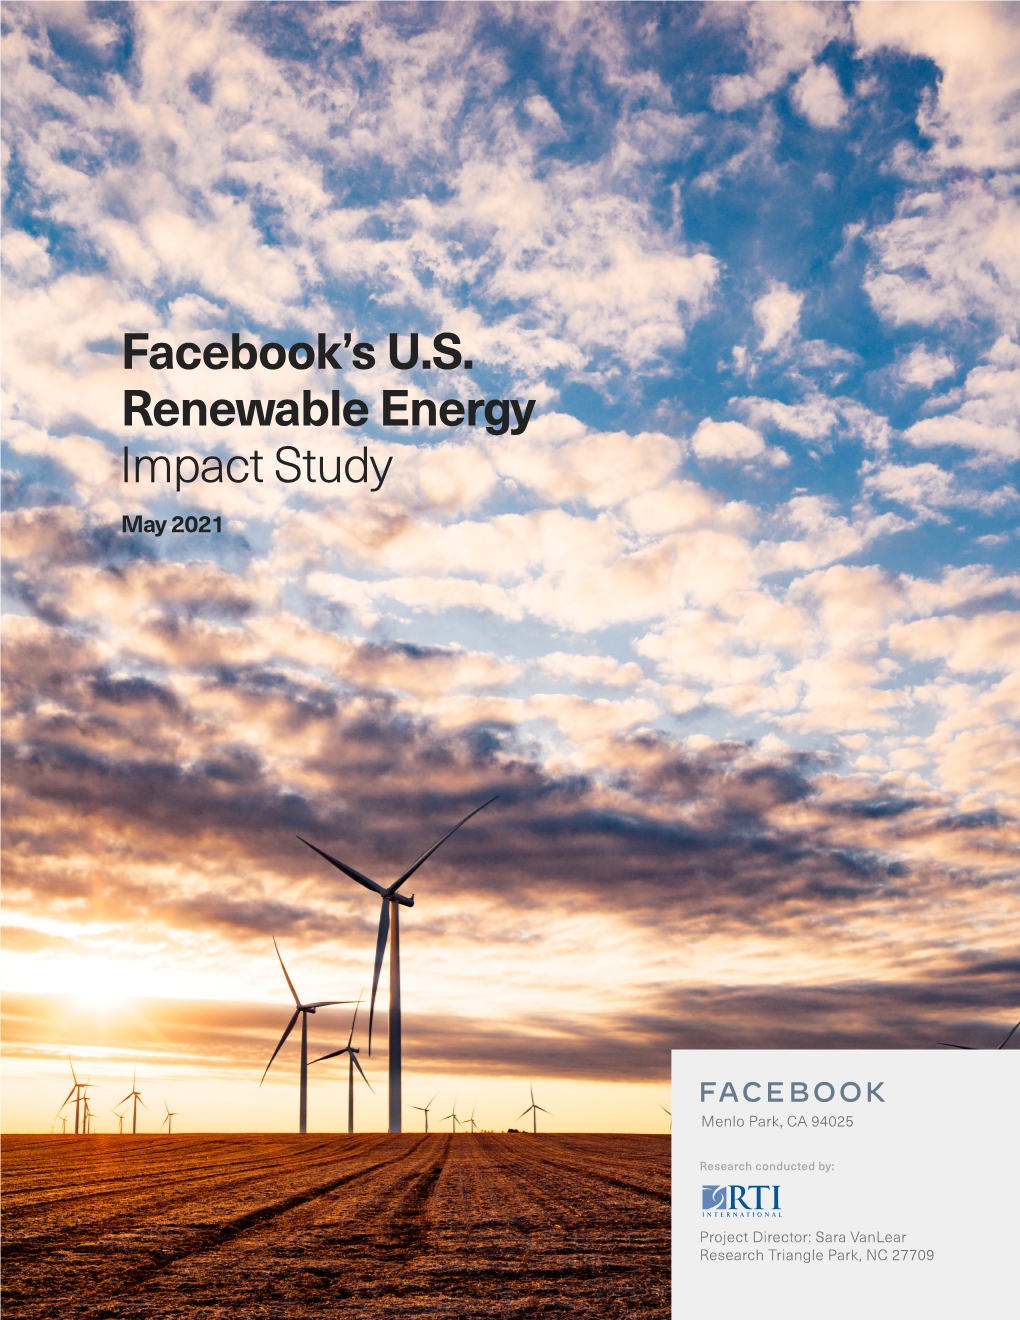 Facebook's U.S. Renewable Energy Impact Study